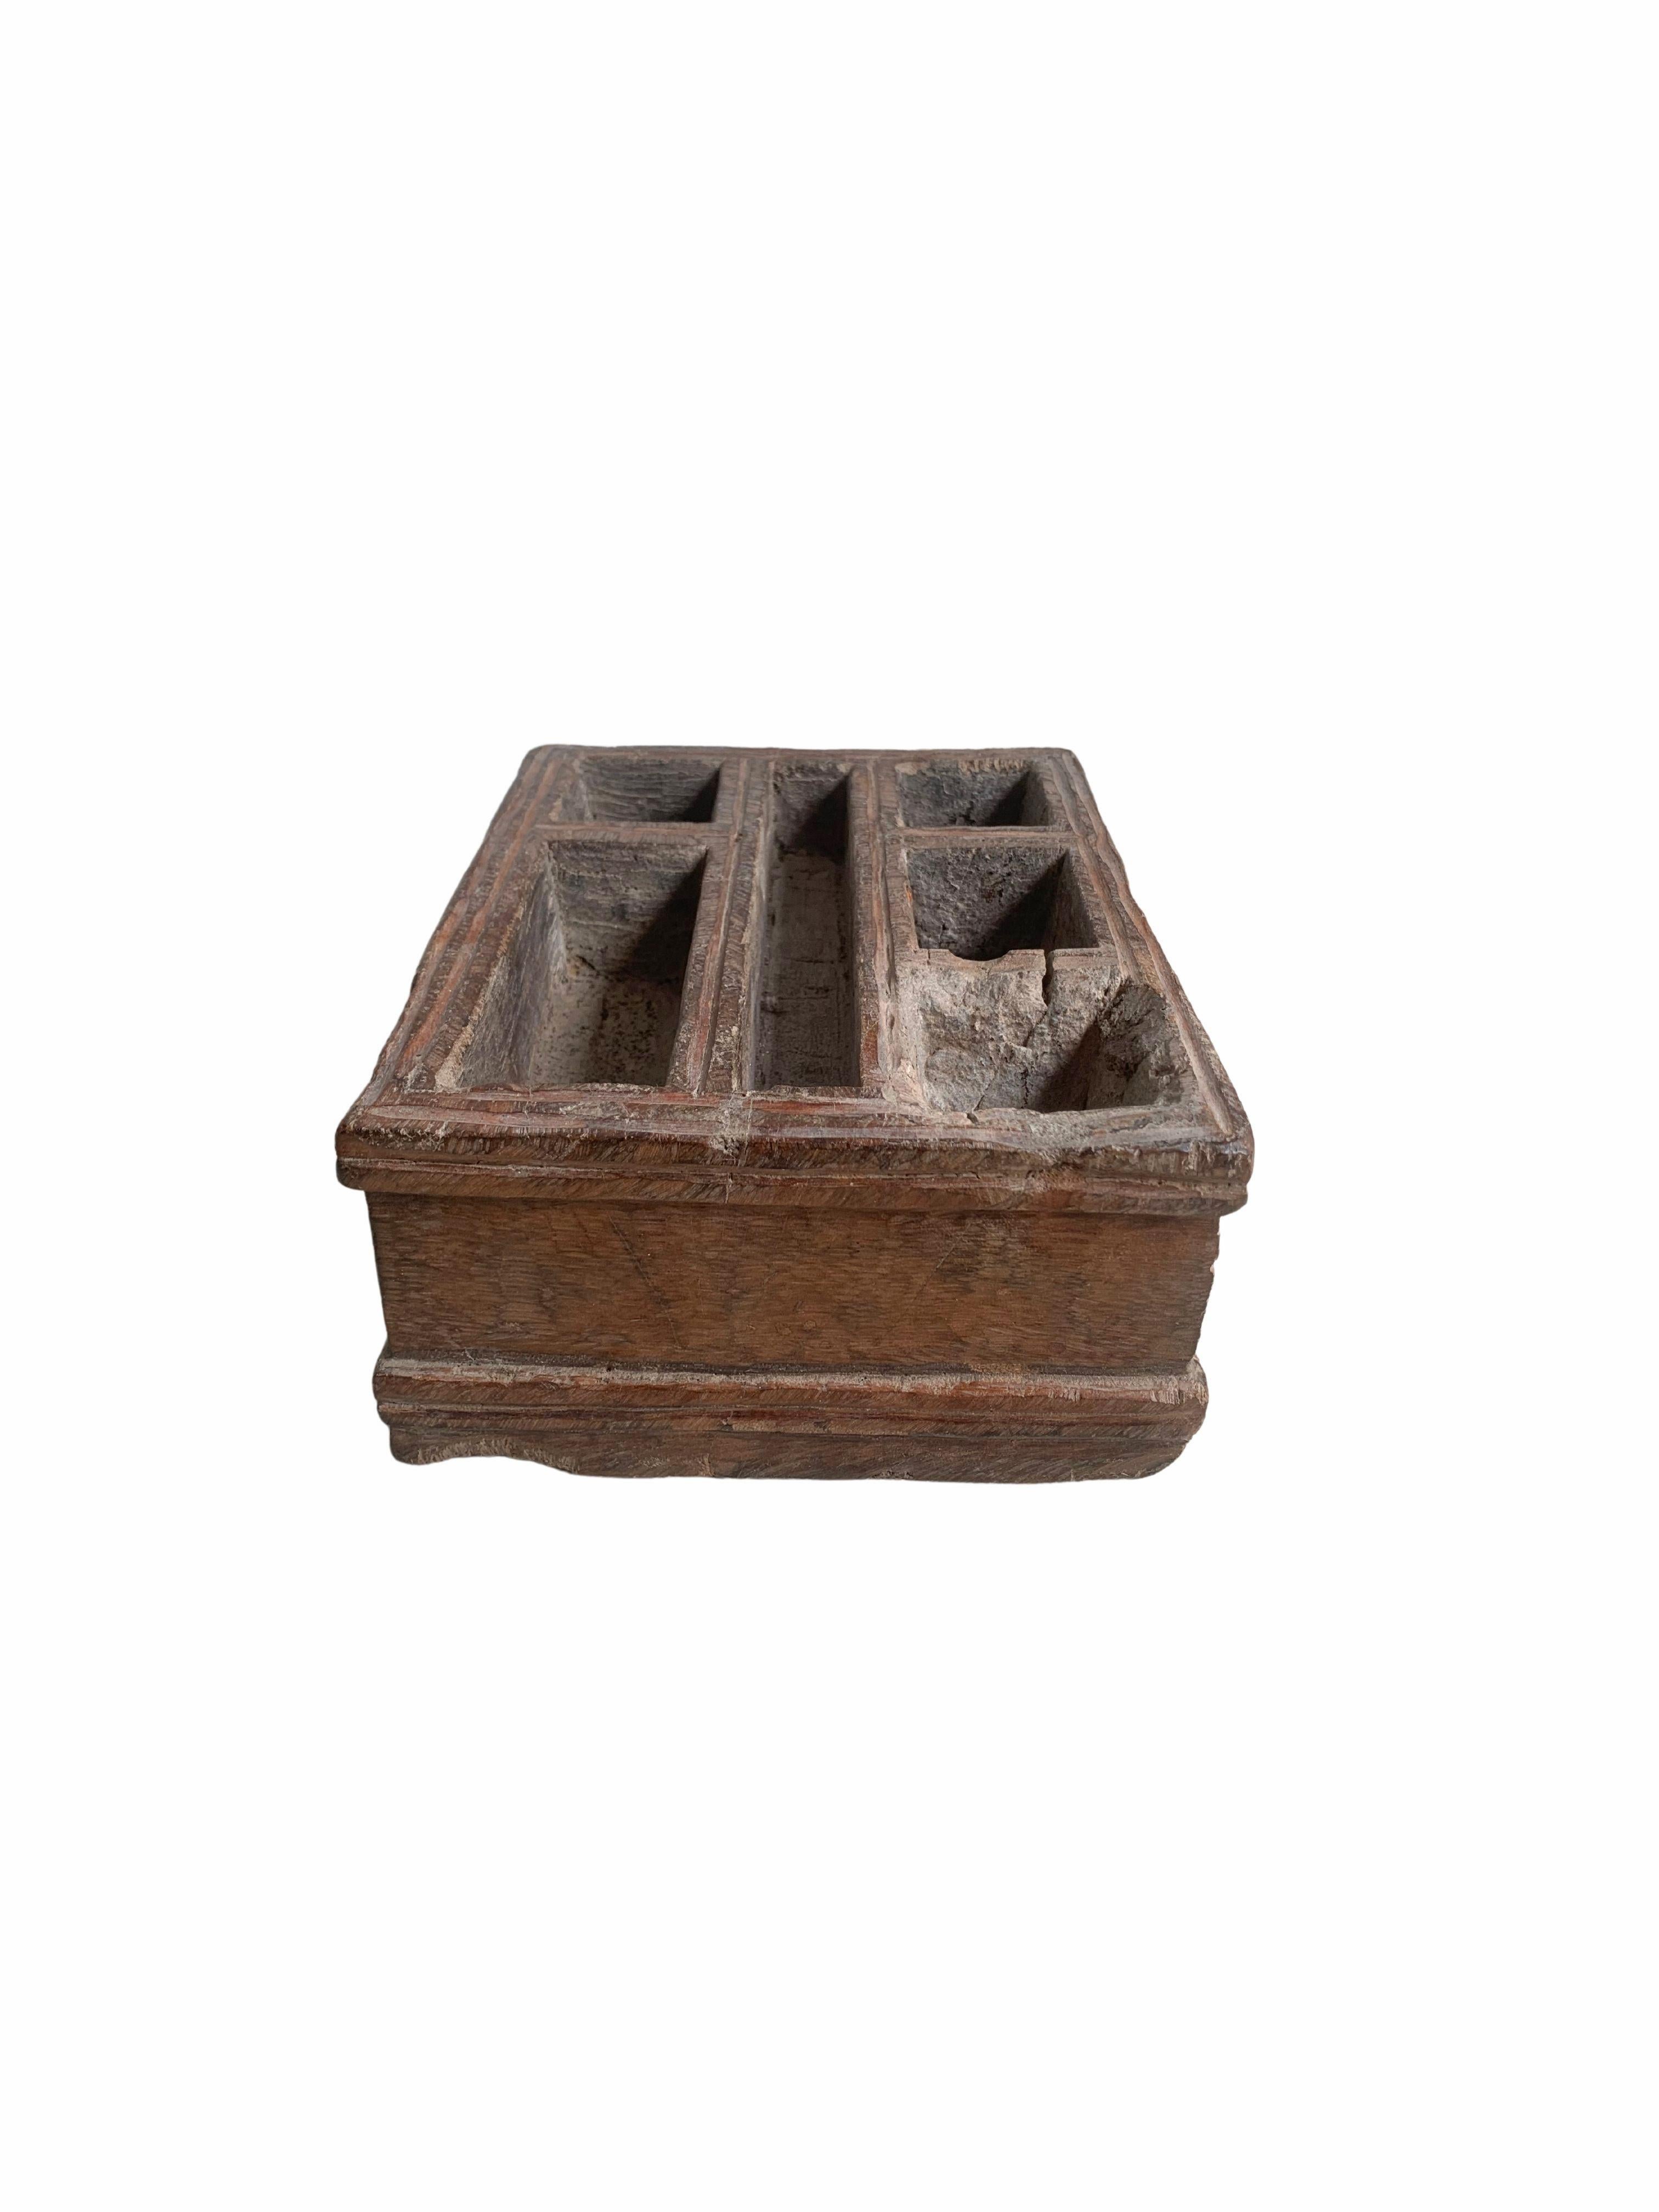 antique betel nut box